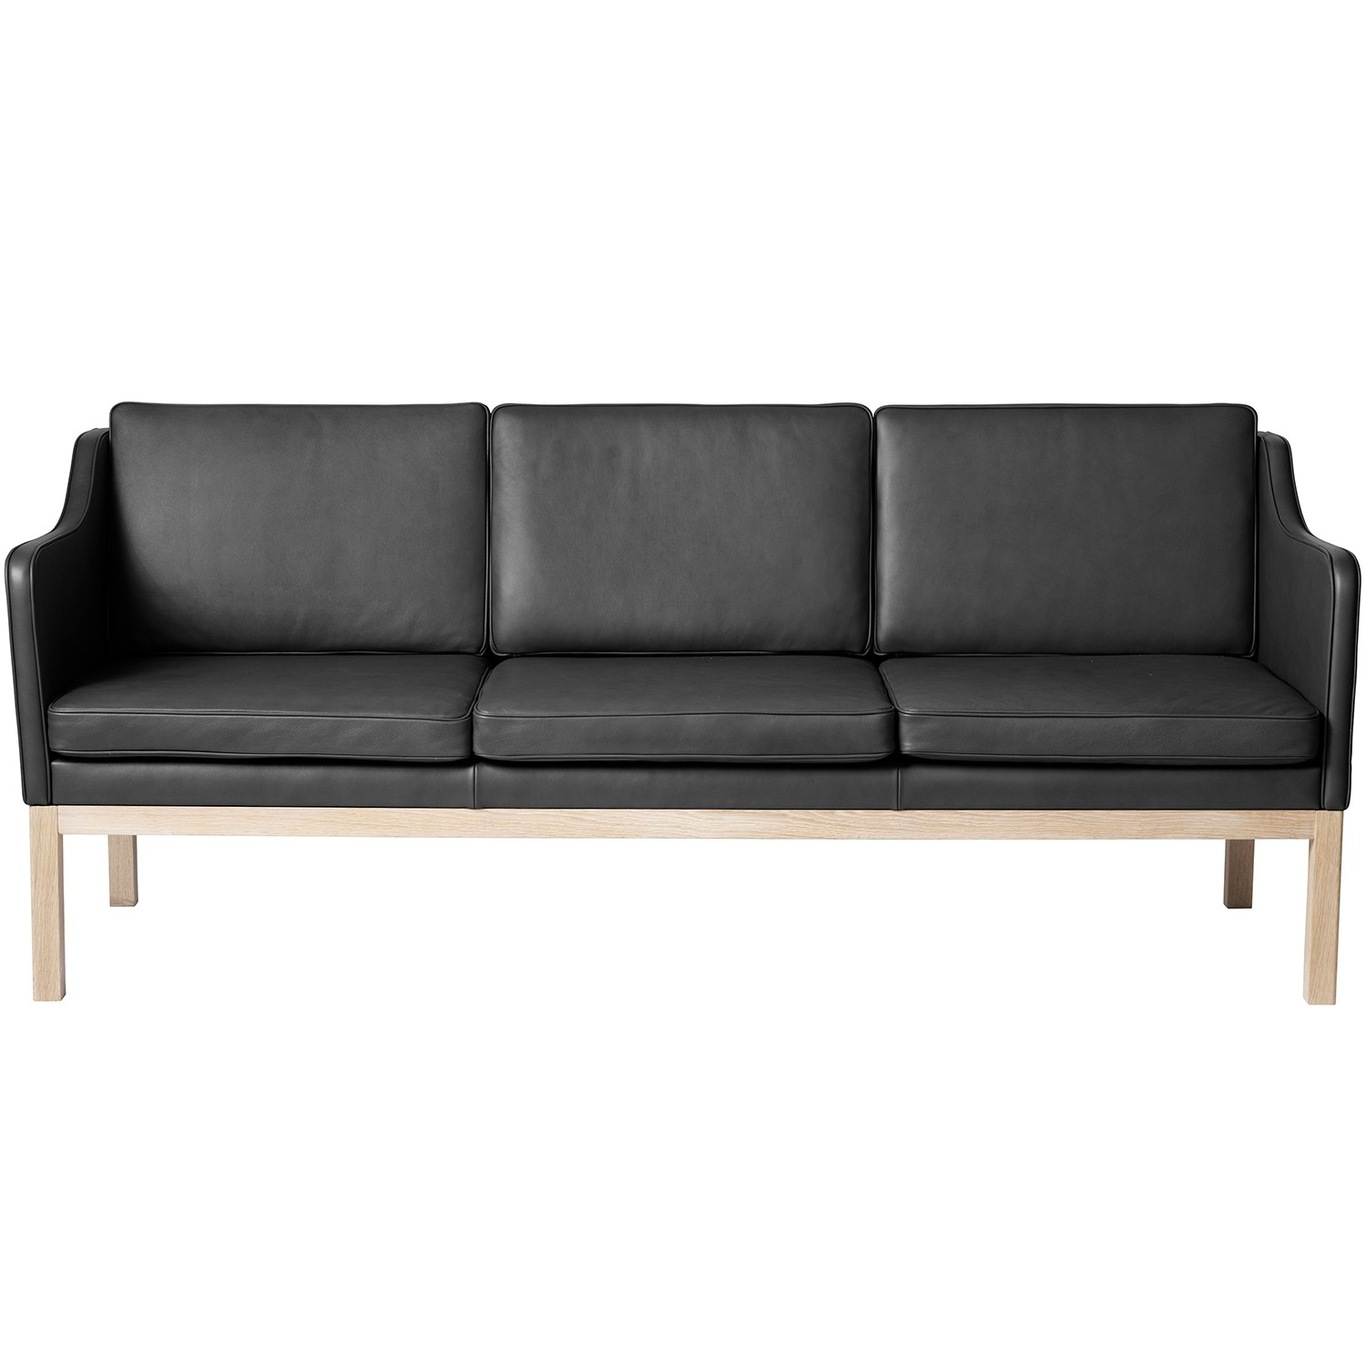 J182 3 Seater Sofa, Zea Leather Black